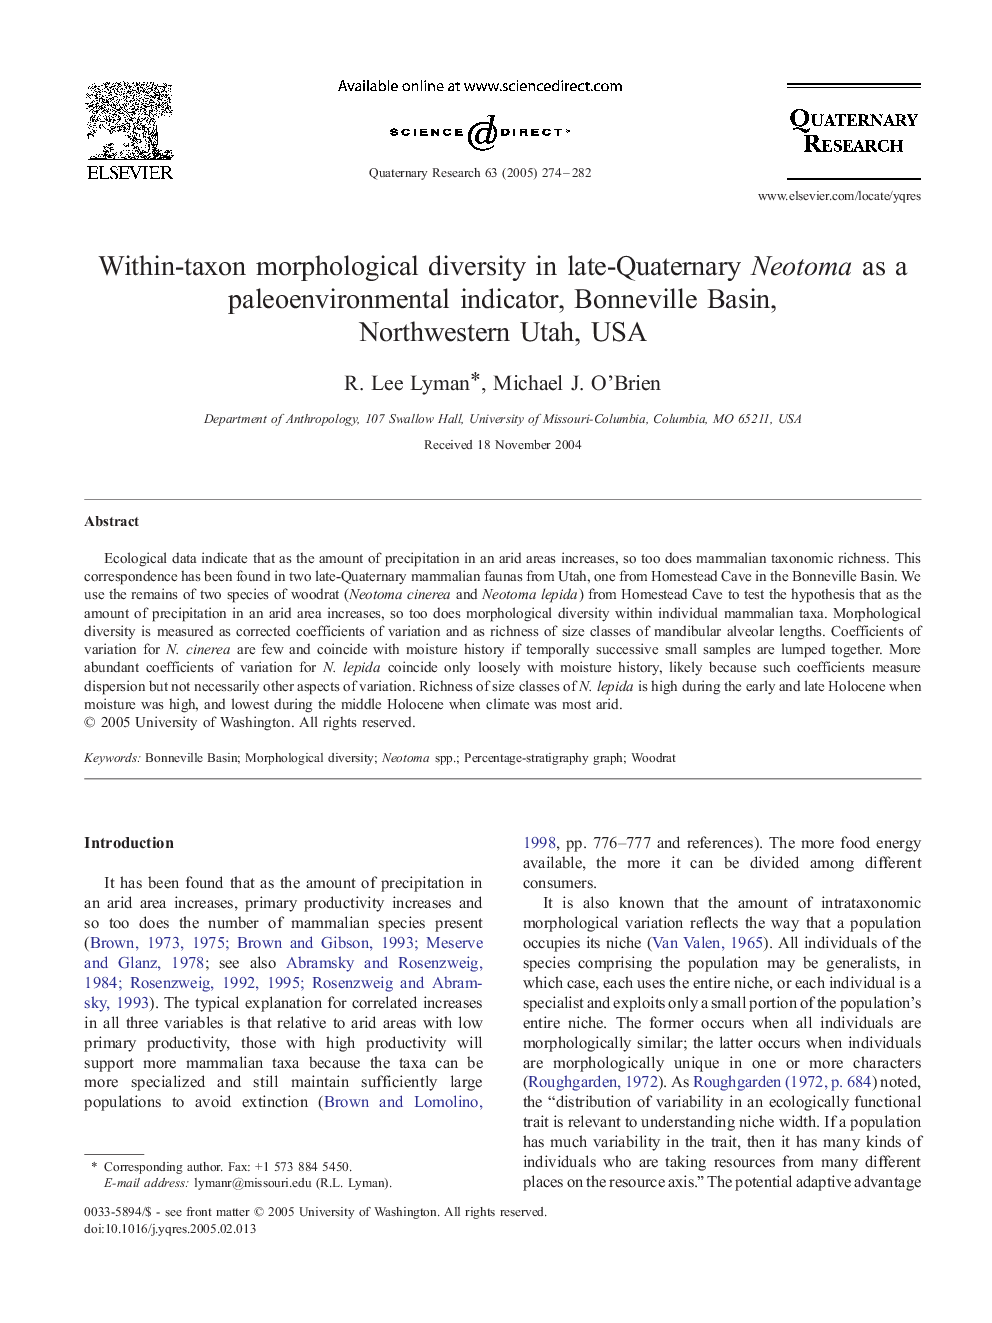 Within-taxon morphological diversity in late-Quaternary Neotoma as a paleoenvironmental indicator, Bonneville Basin, Northwestern Utah, USA